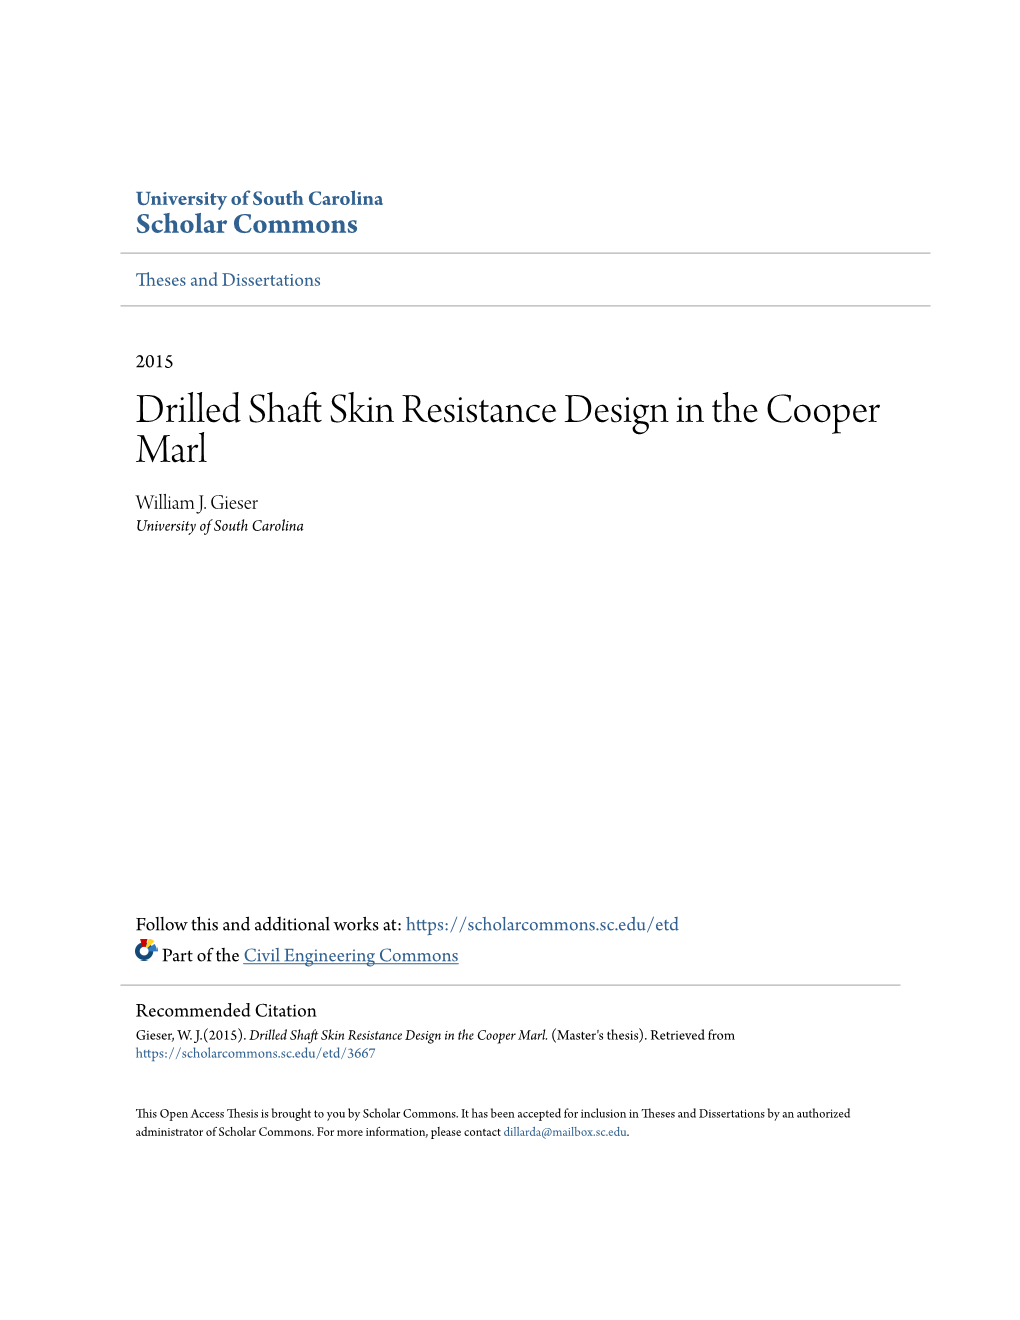 Drilled Shaft Skin Resistance Design in the Cooper Marl